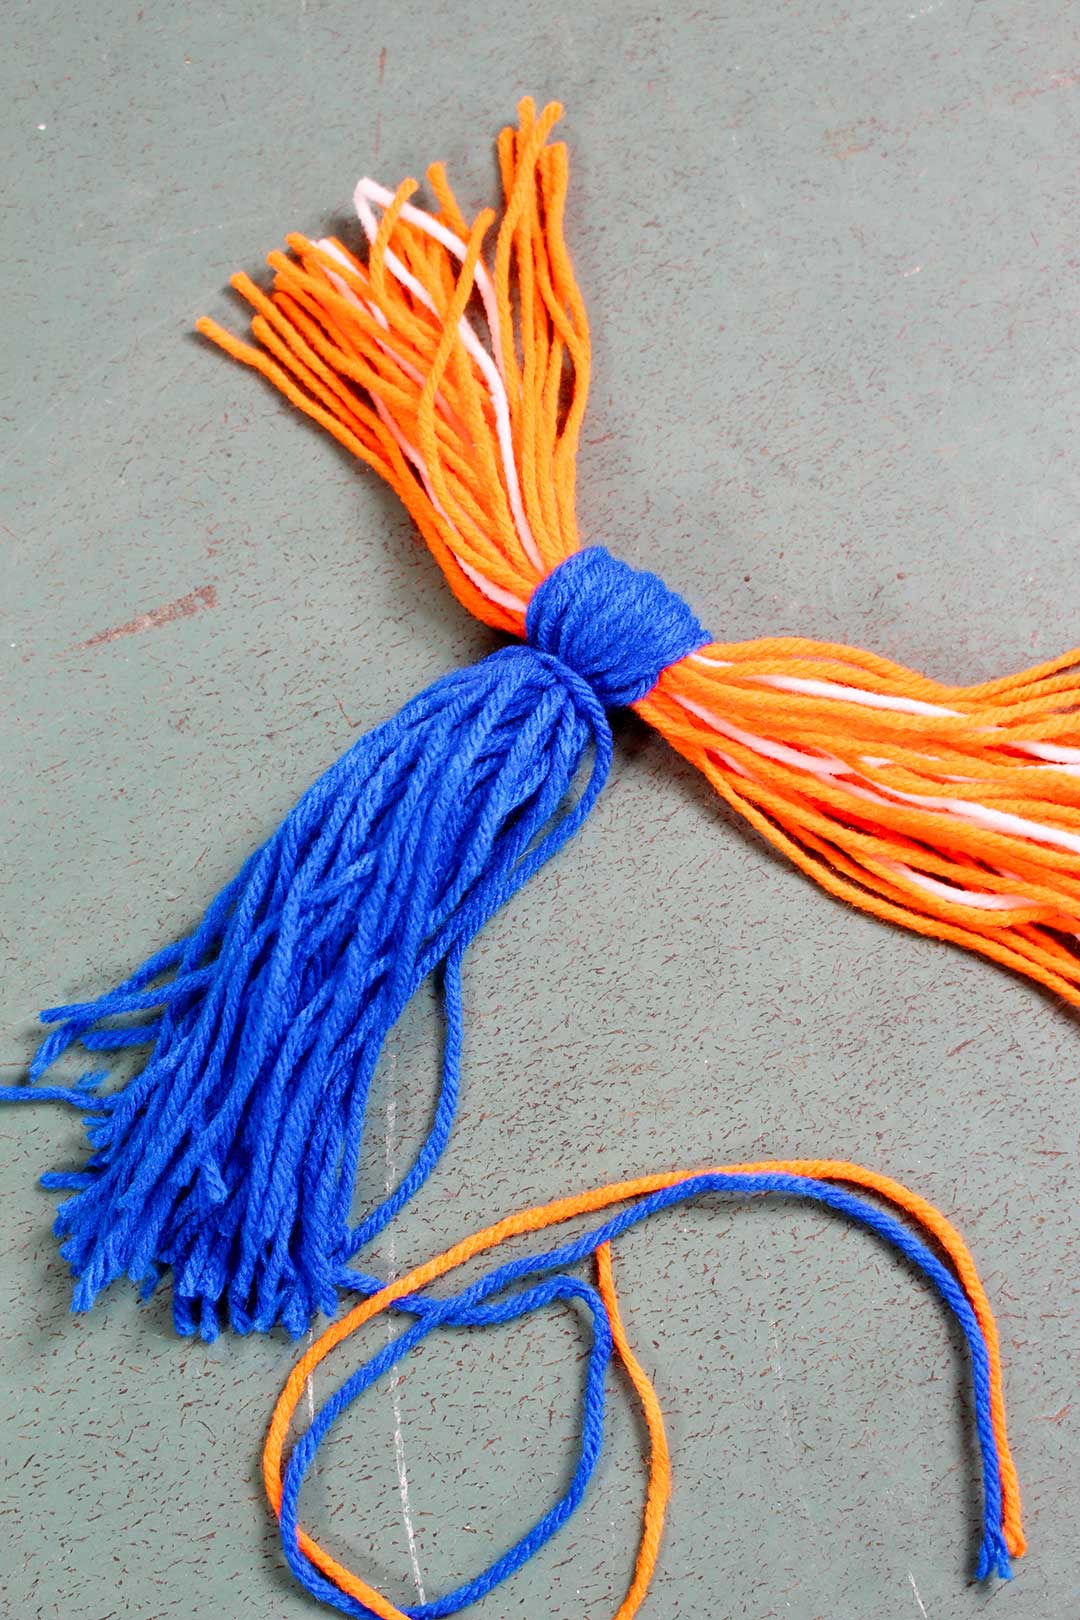 A bunch of blue yarn folded around strands of orange and white yarn.